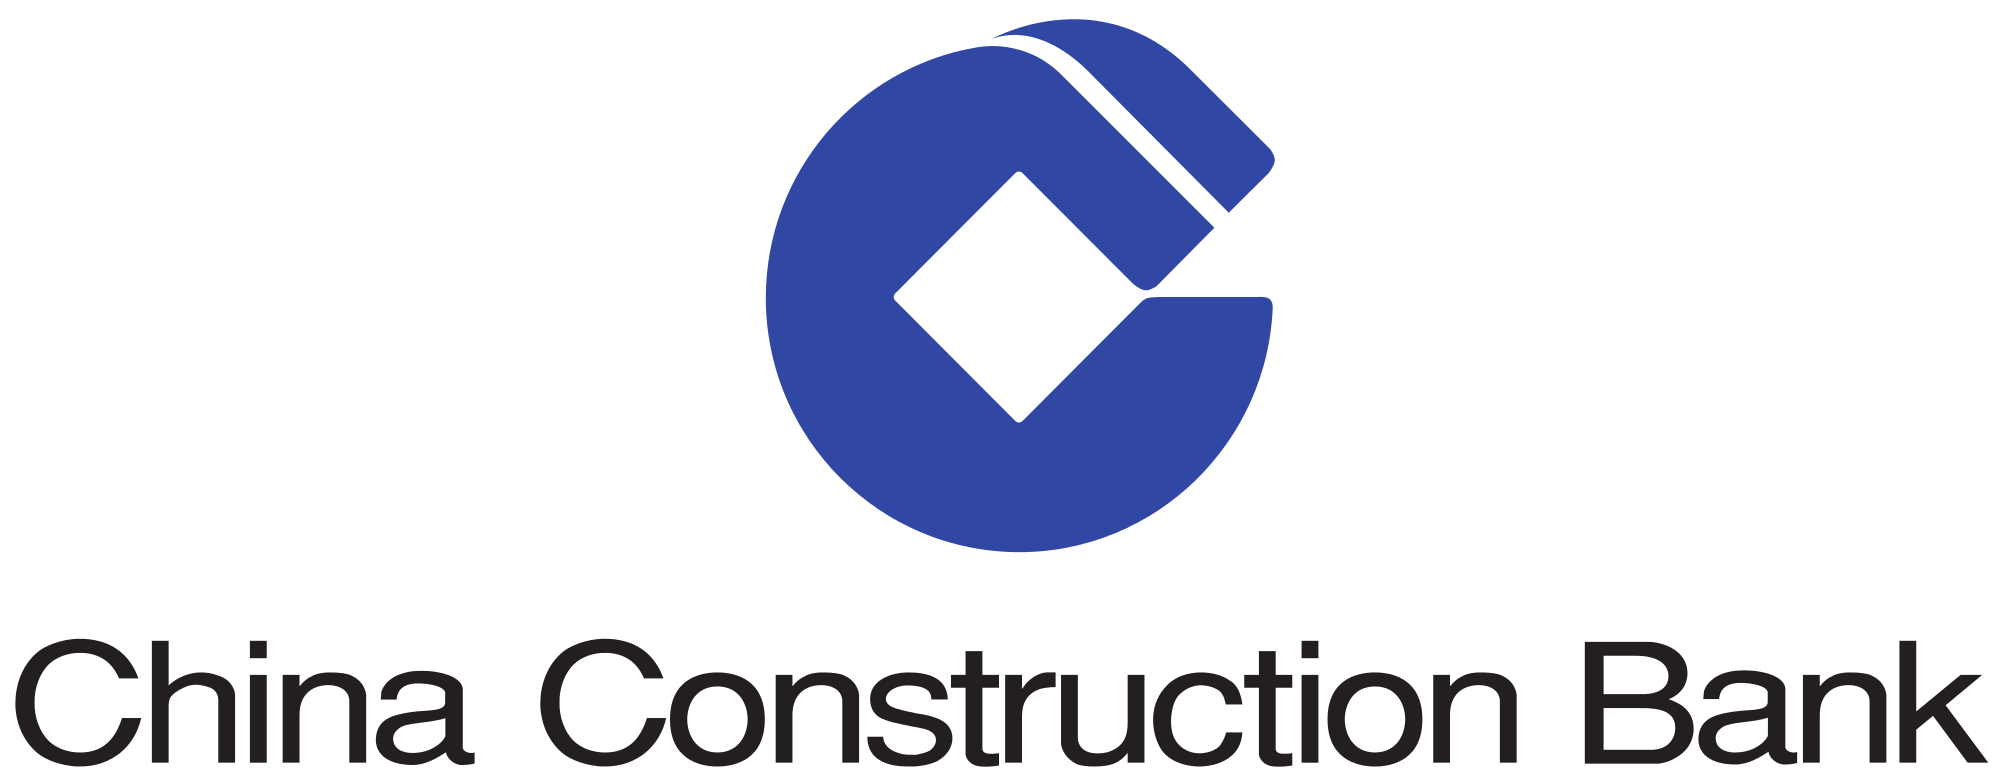 China Construction Bank логотип. China Construction Bank Corporation Китай. Bank logo. China Construction Bank лого на чёрном фоне.